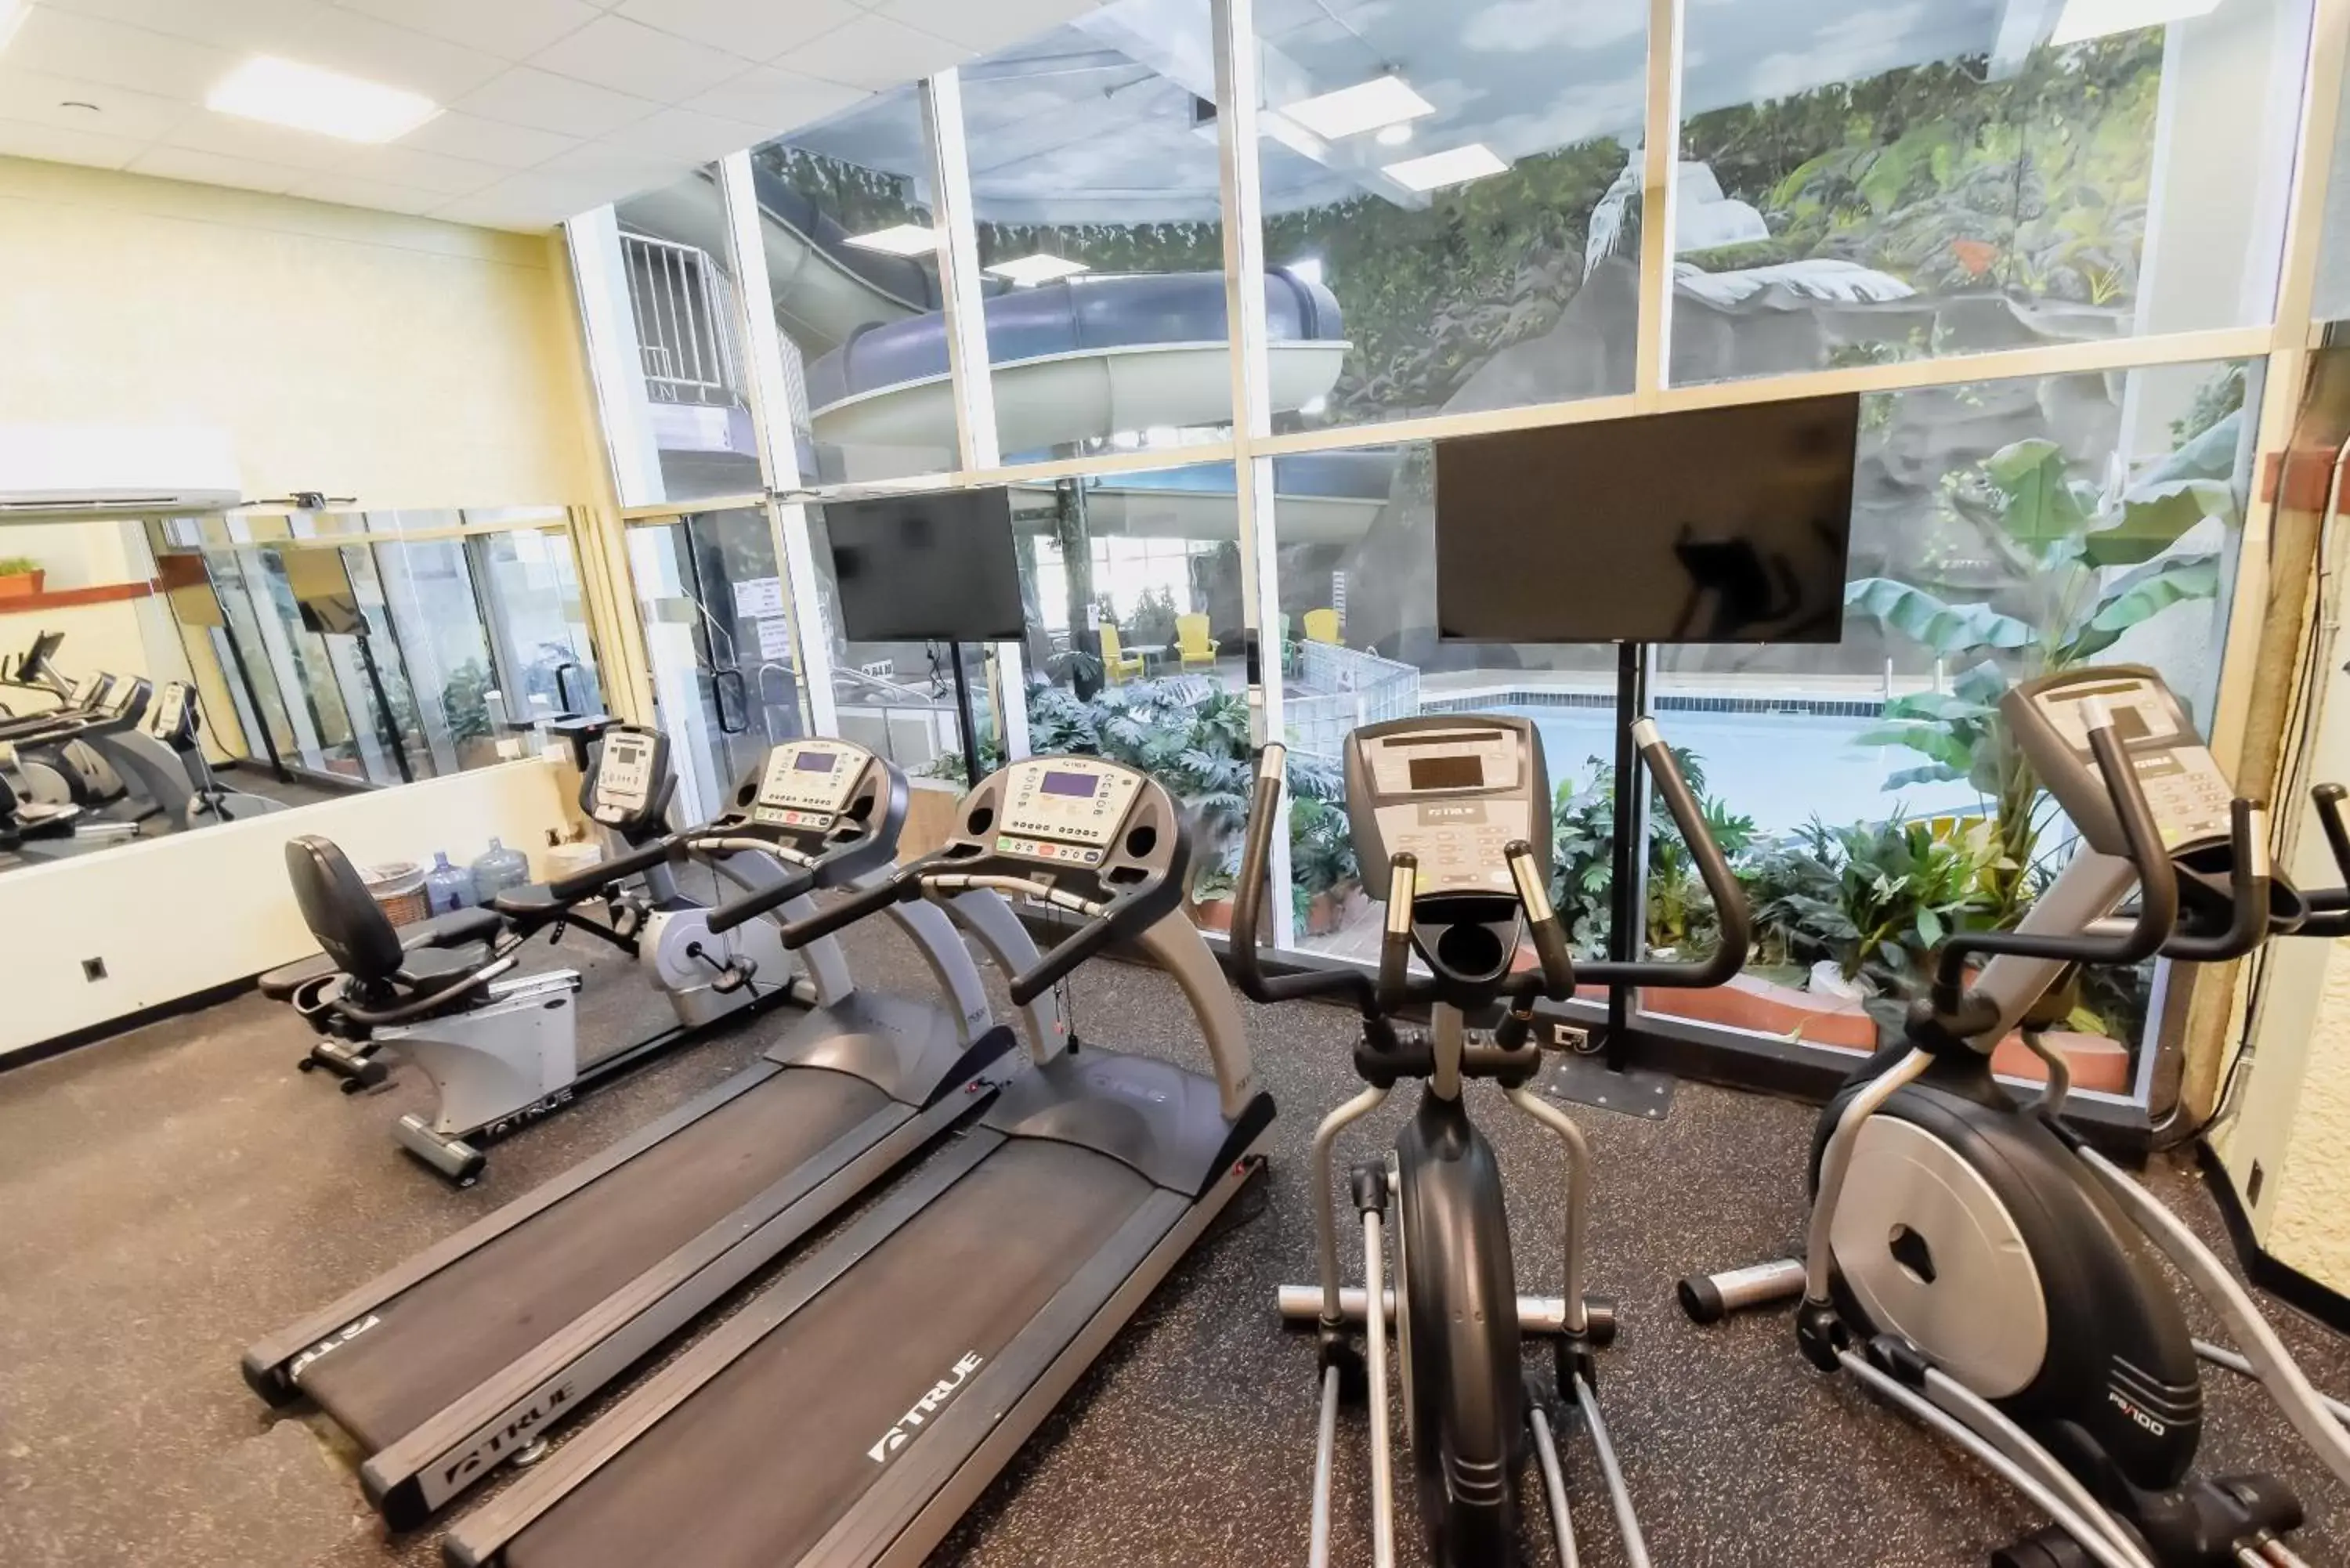 Fitness centre/facilities, Fitness Center/Facilities in Canad Inns Destination Centre Windsor Park